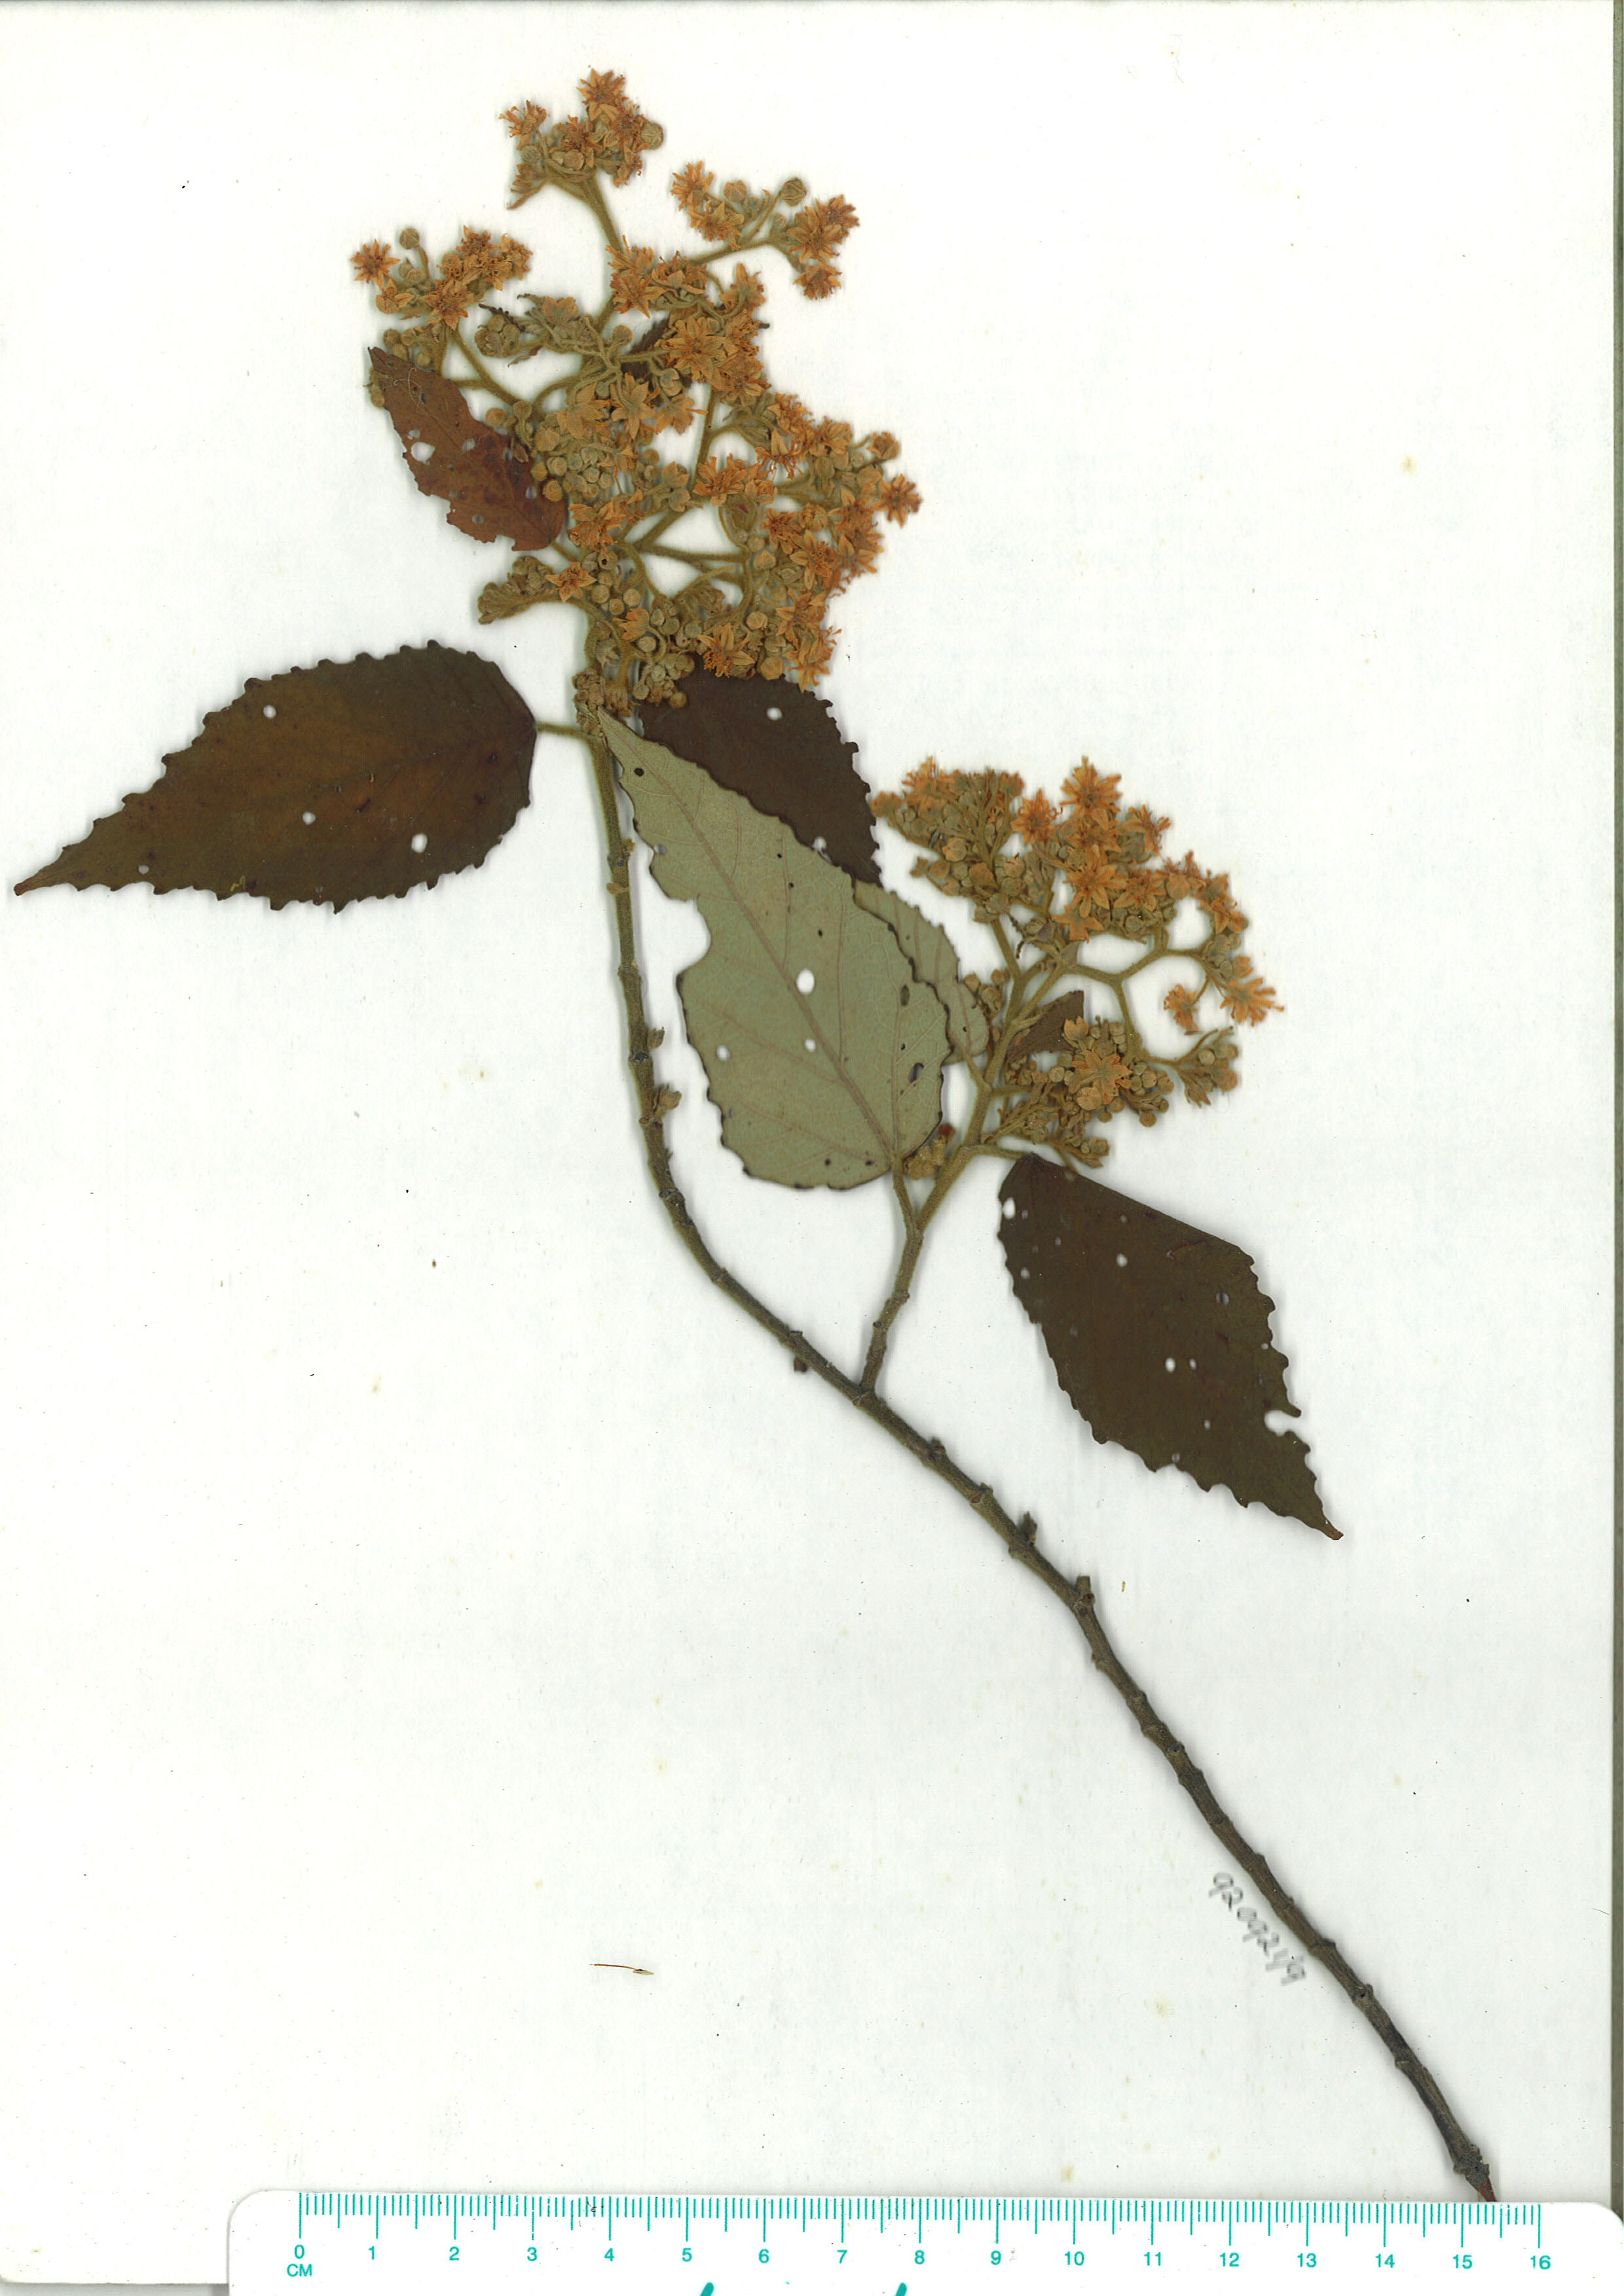 Scanned herbarium image of Commersonia fraseri